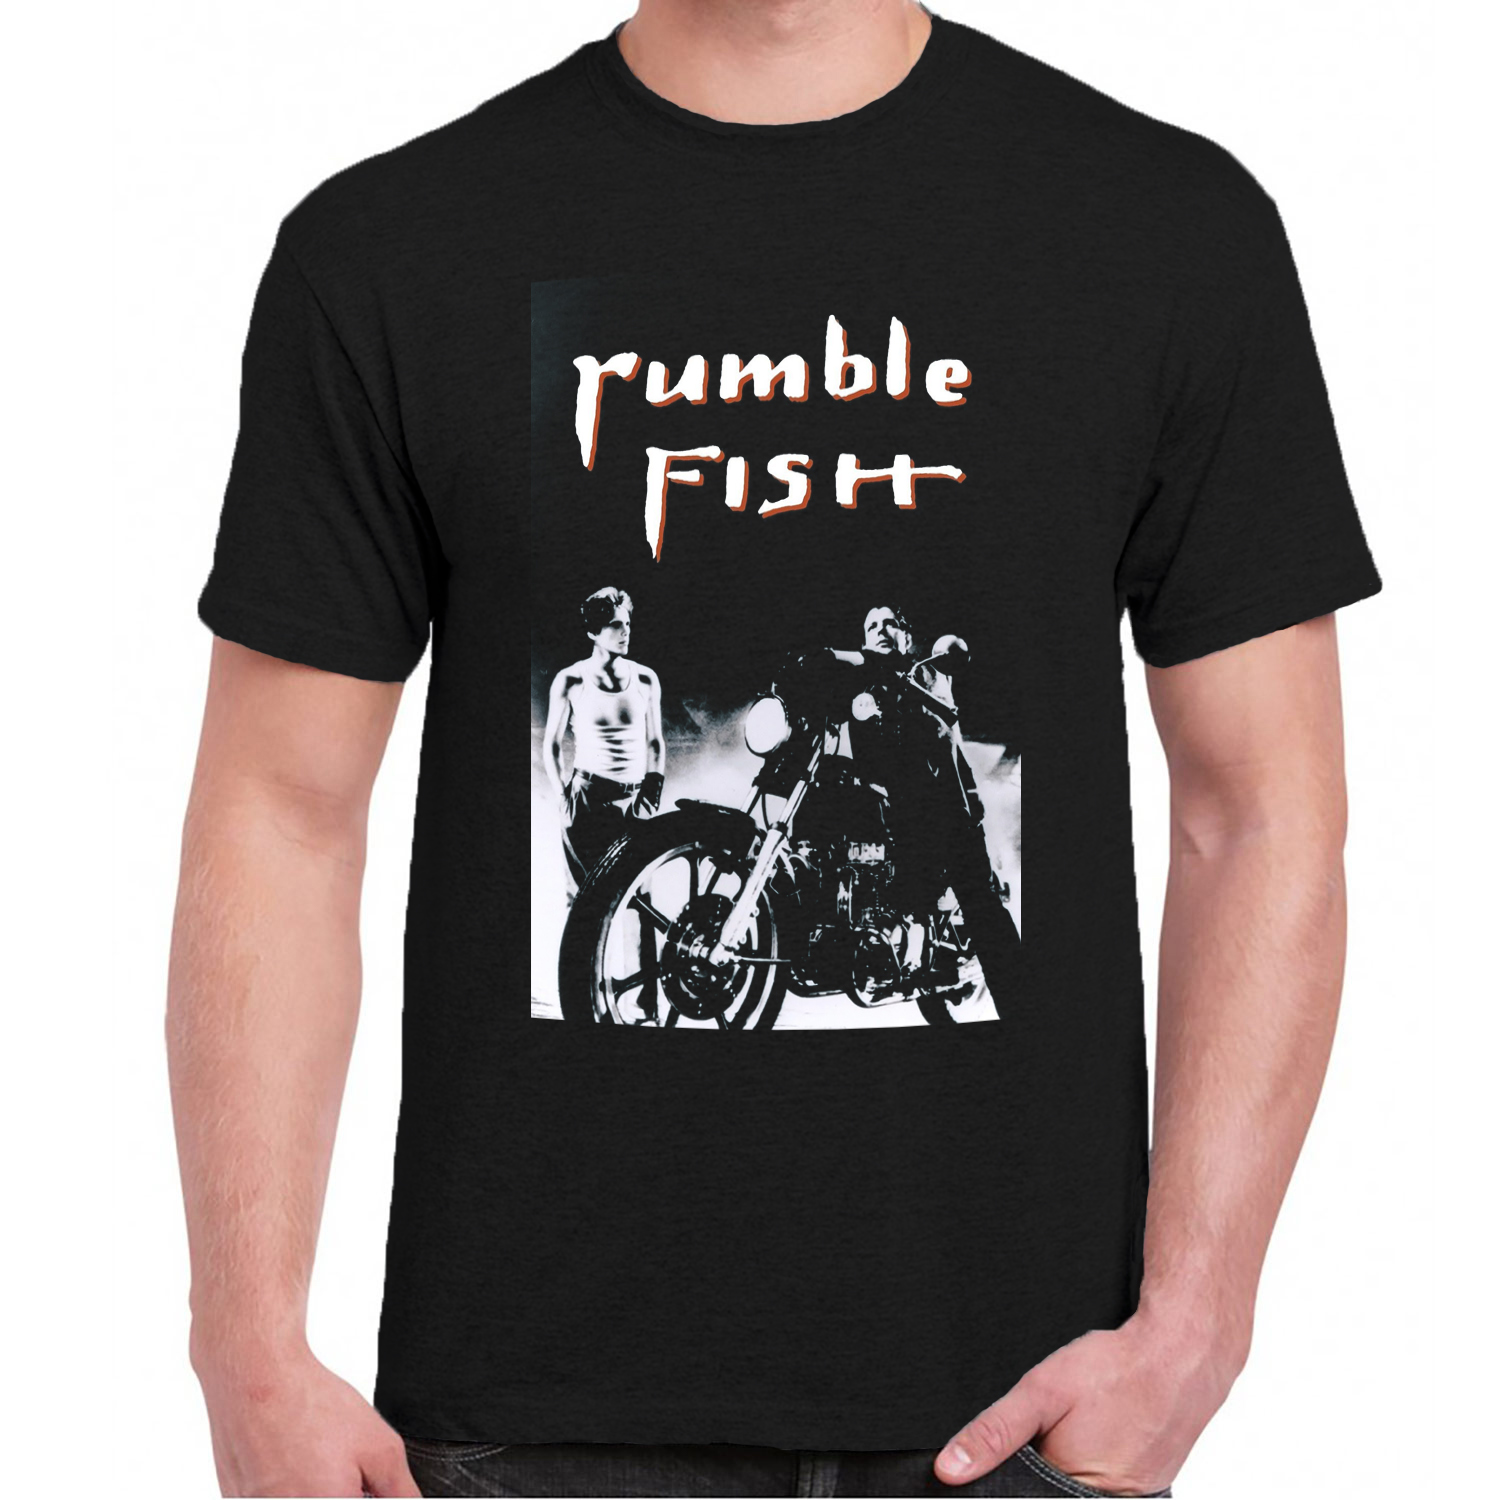 https://spankshirt.com/wp-content/uploads/2021/09/6CP-A-065-Rumble-Fish-t-shirt-cult-movie-film-serie-retro-vintage-tshirts-shirt-t-shirts-for-men-cotton-design-handmade-logo-new.jpg